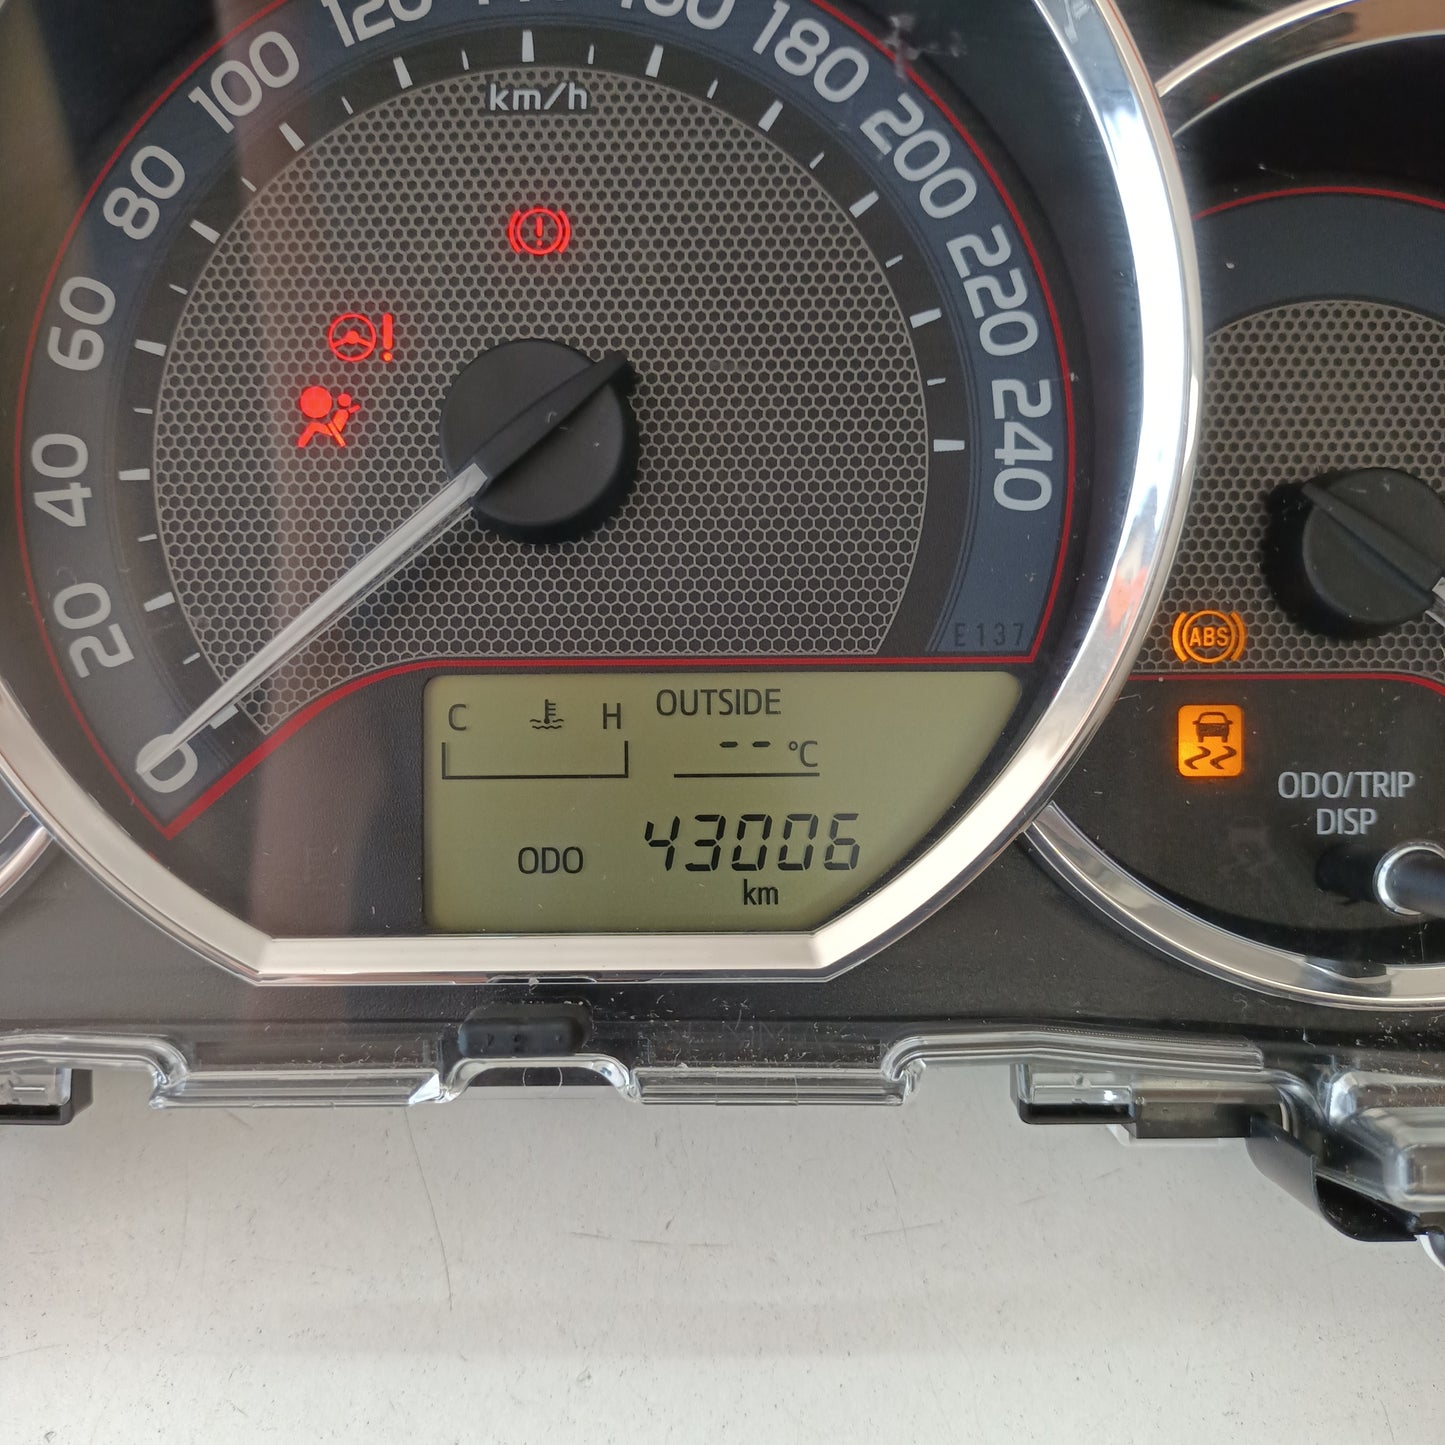 Toyota Corolla Hatchback Instrument Cluster ZRE182R 2012 2013 2014 2015 43006km